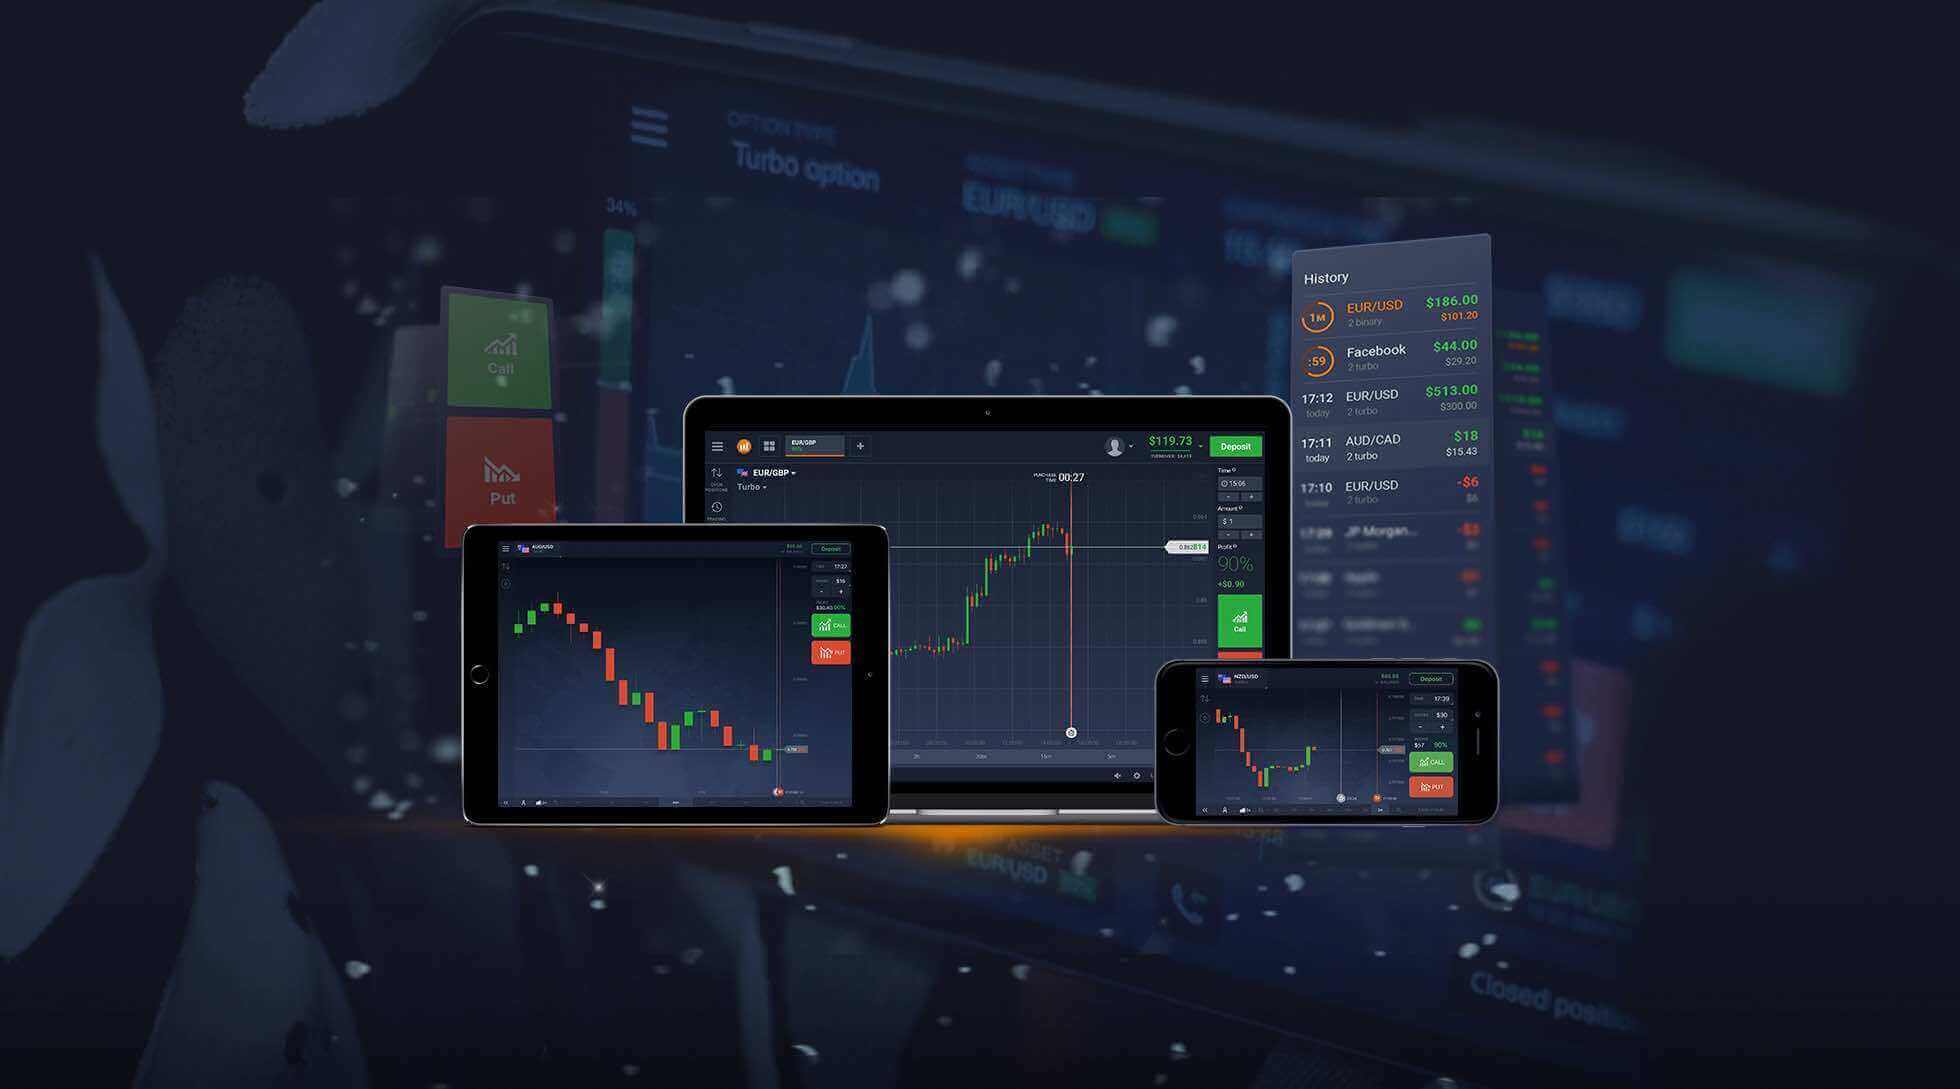 IQ trading platform